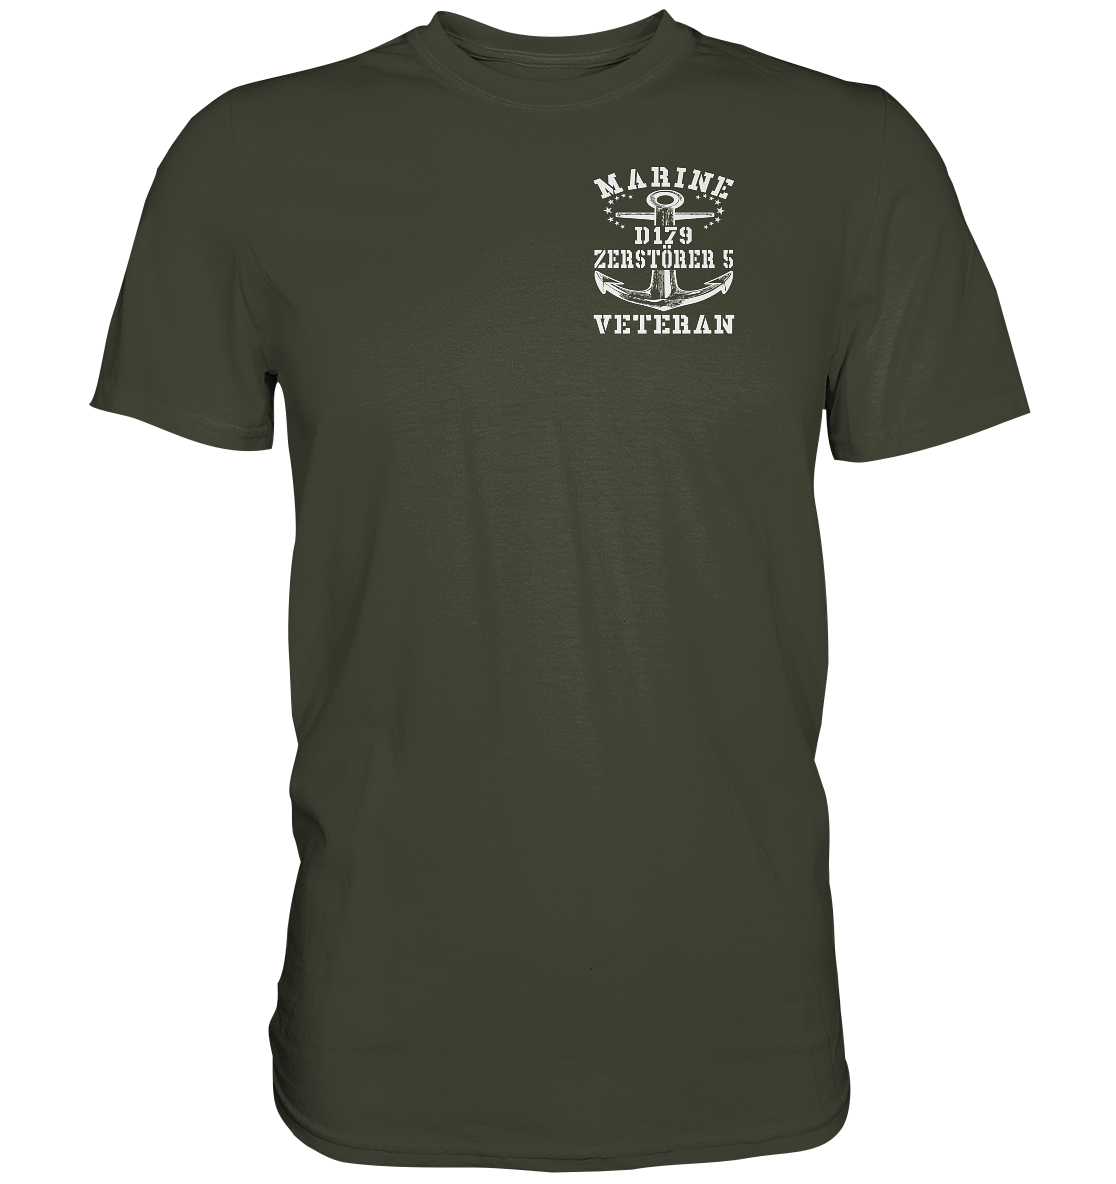 D179 ZERSTÖRER 5 Marine Veteran Brustlogo - Premium Shirt